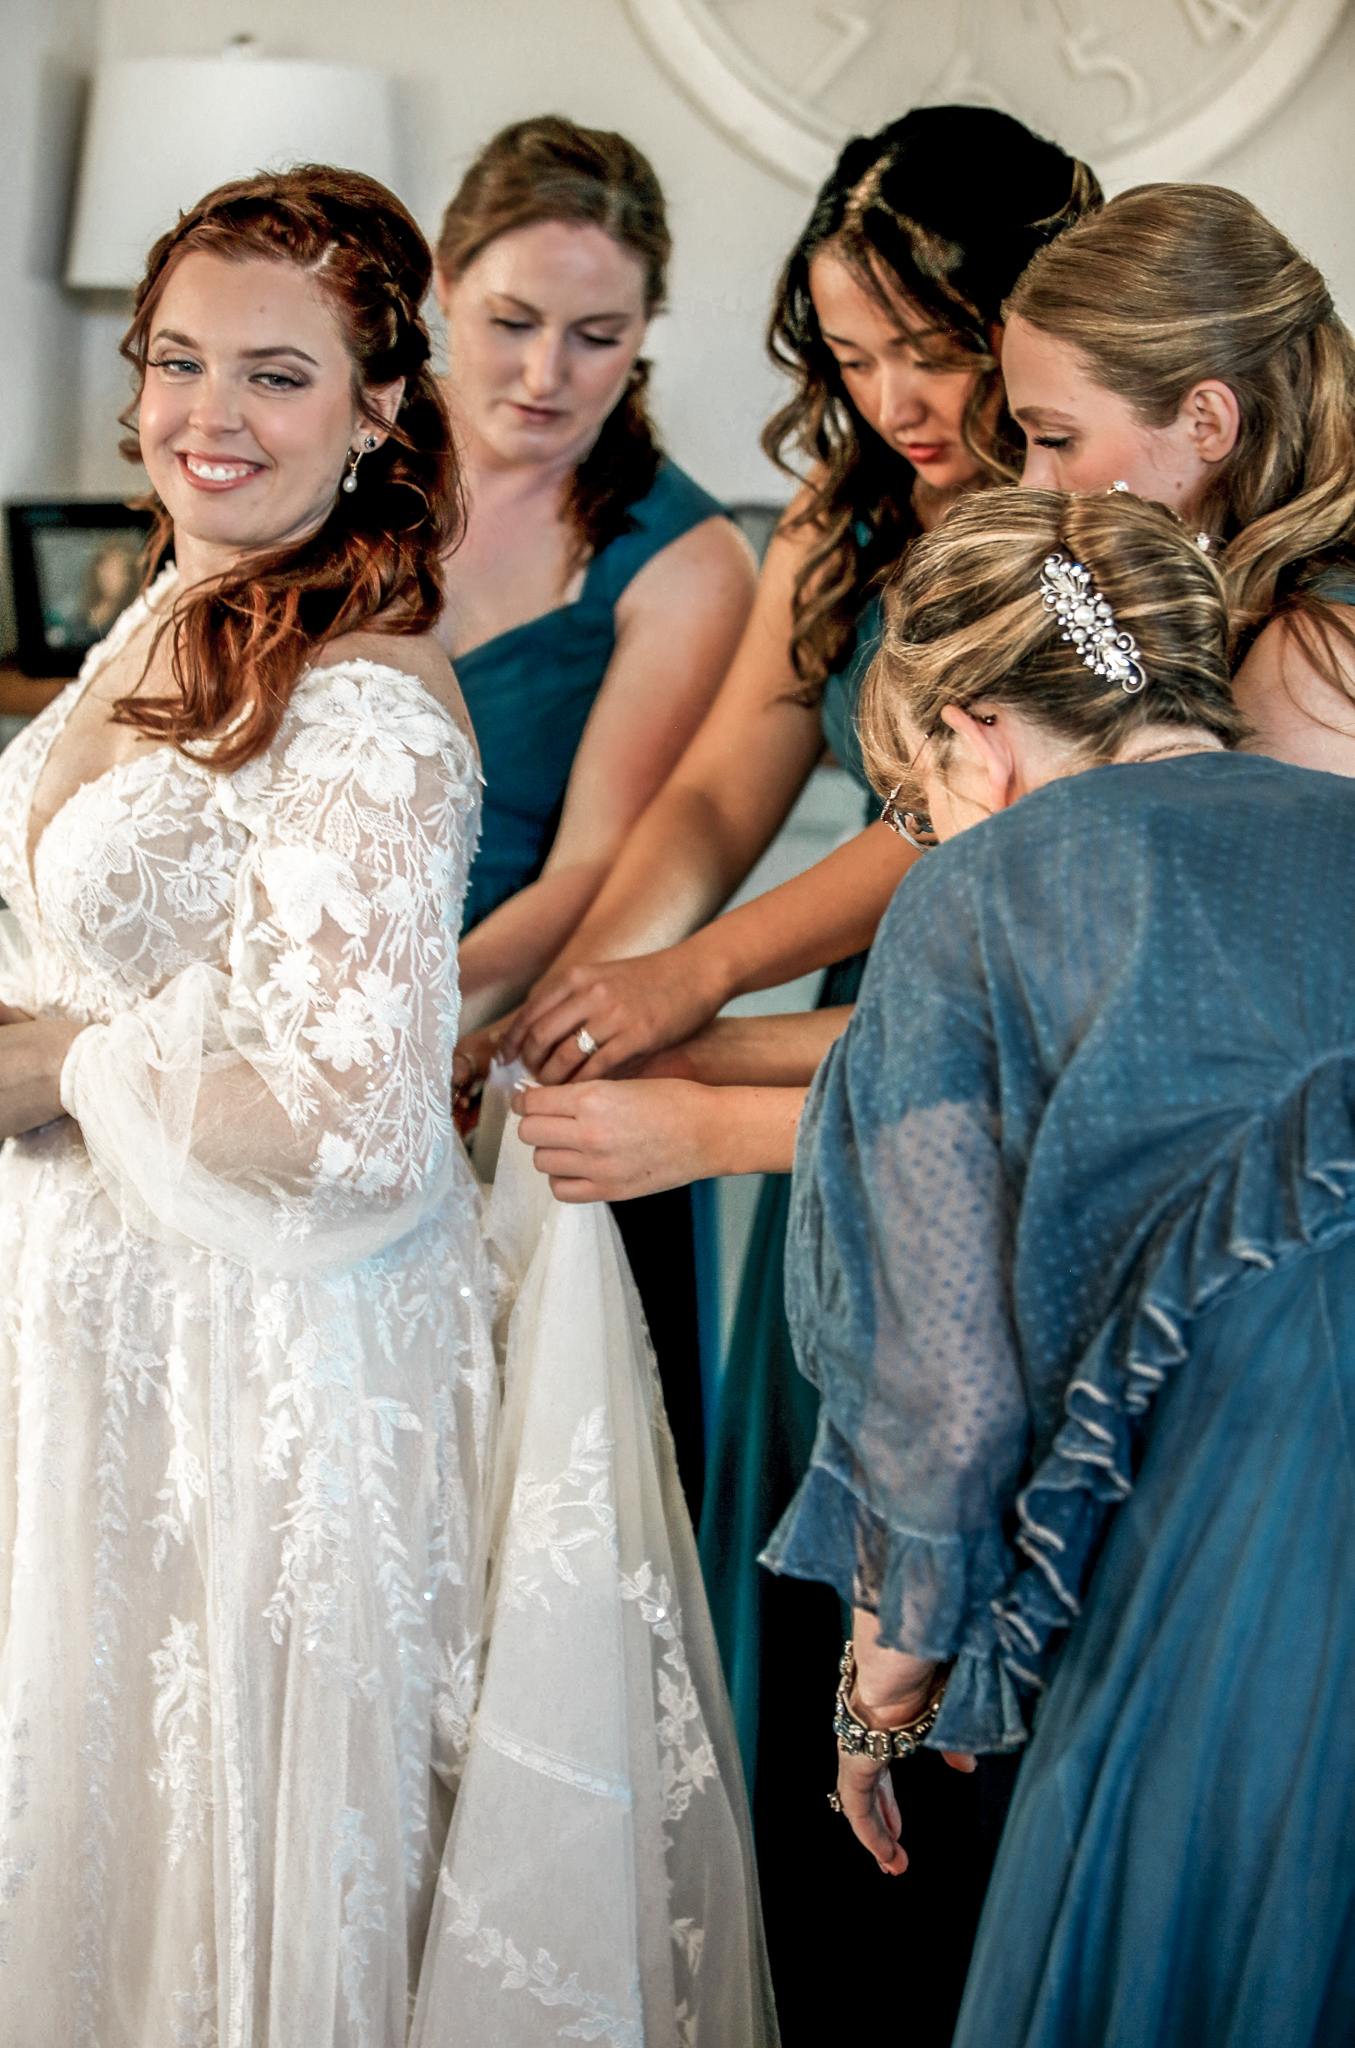 Bridesmaids help a bride get into her wedding dress at a beach wedding in North Carolina. 